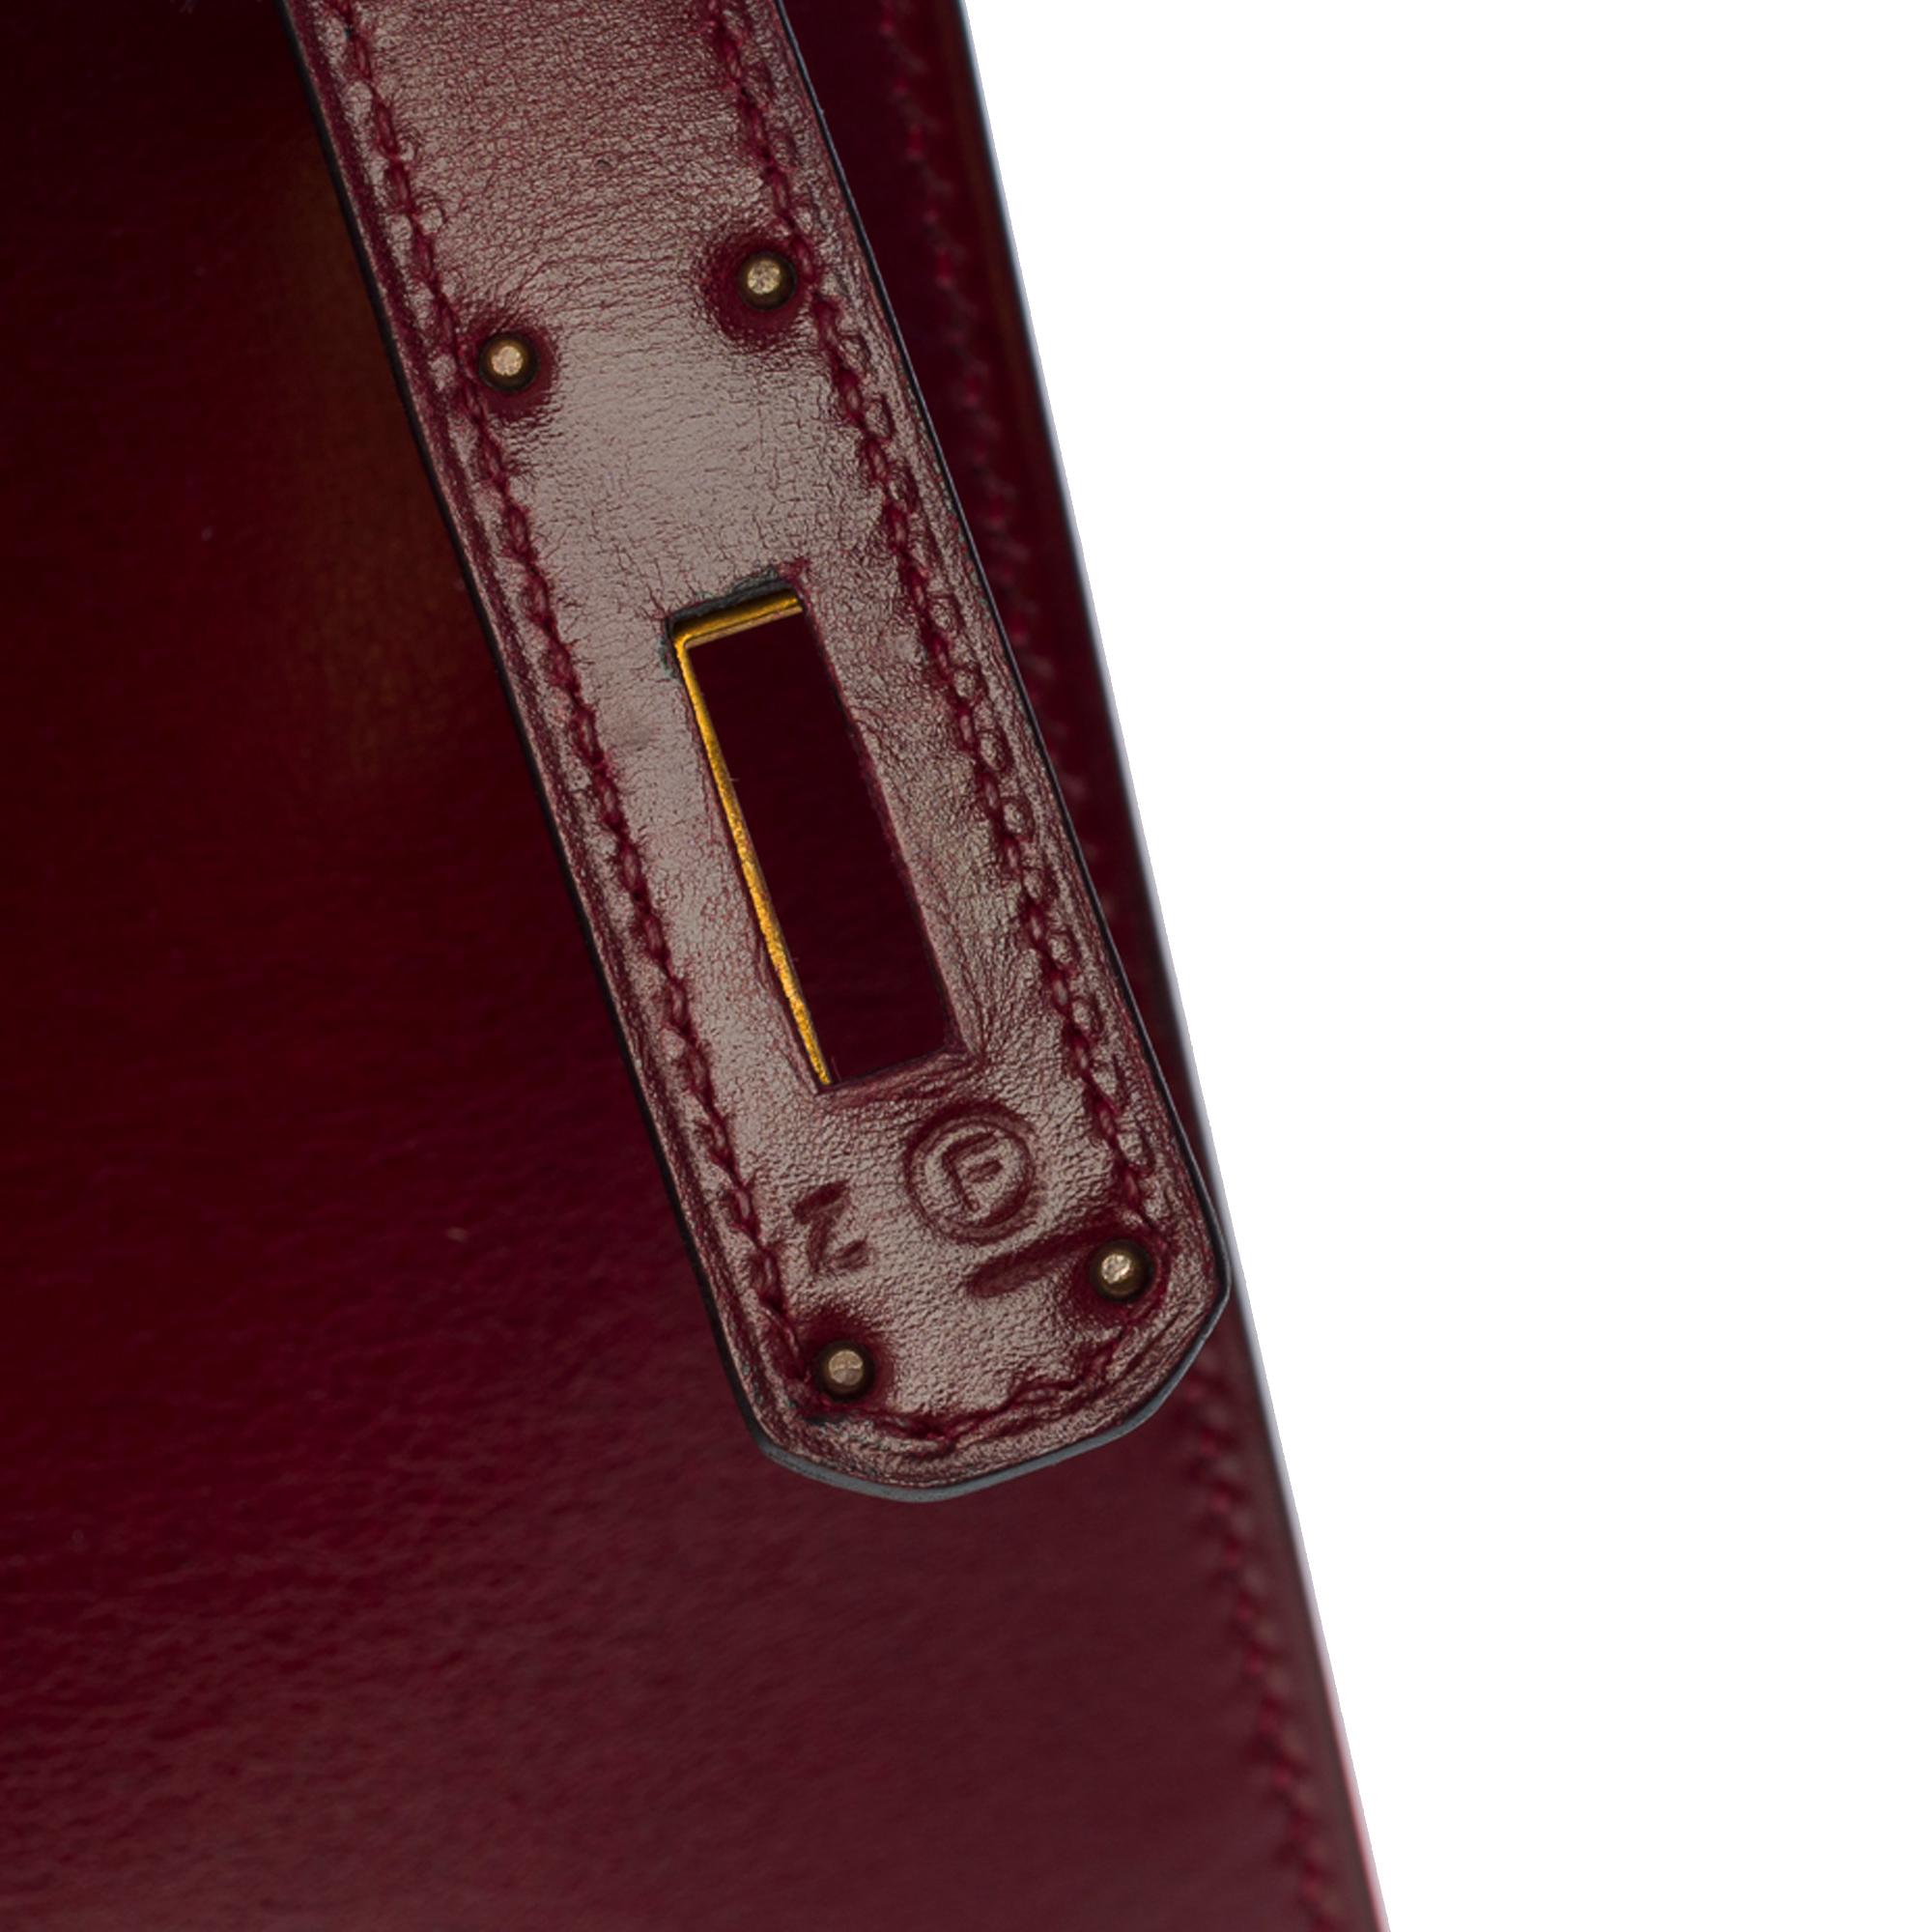 Amazing Hermes Kelly 28 sellier handbag in Rouge H box calf leather, GHW 1